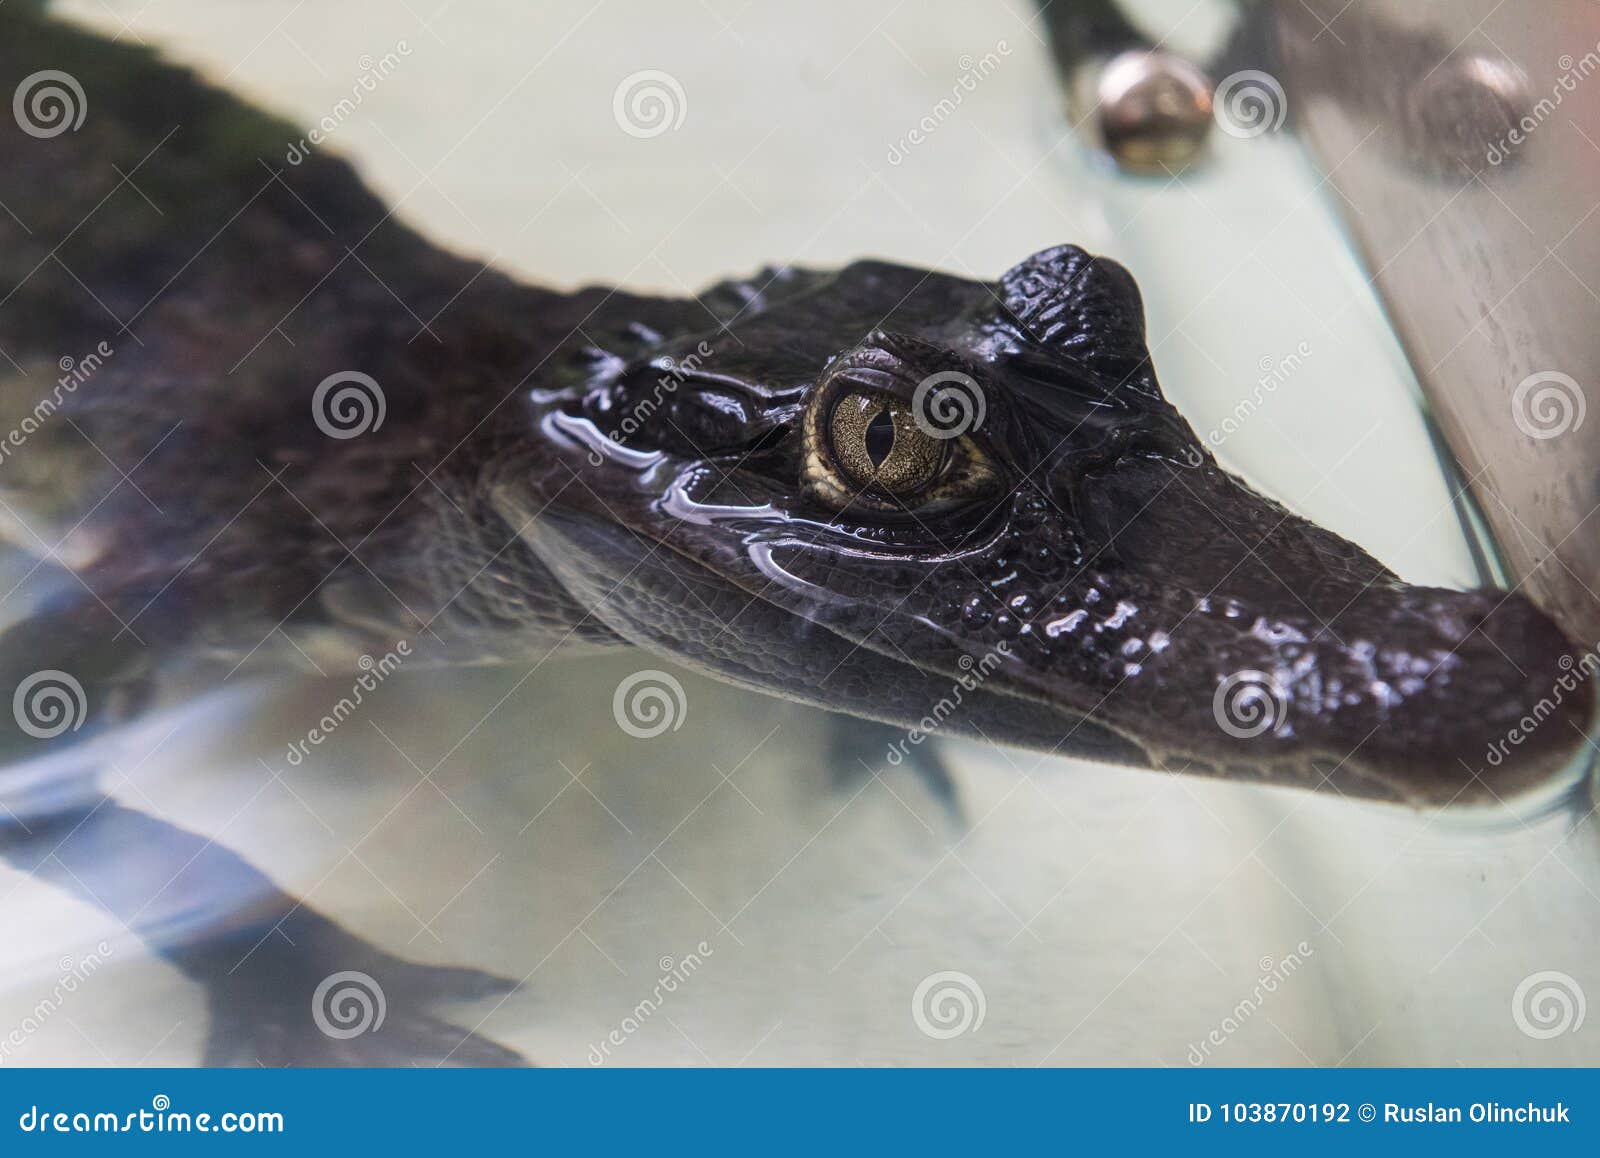 beautiful caiman crocodile